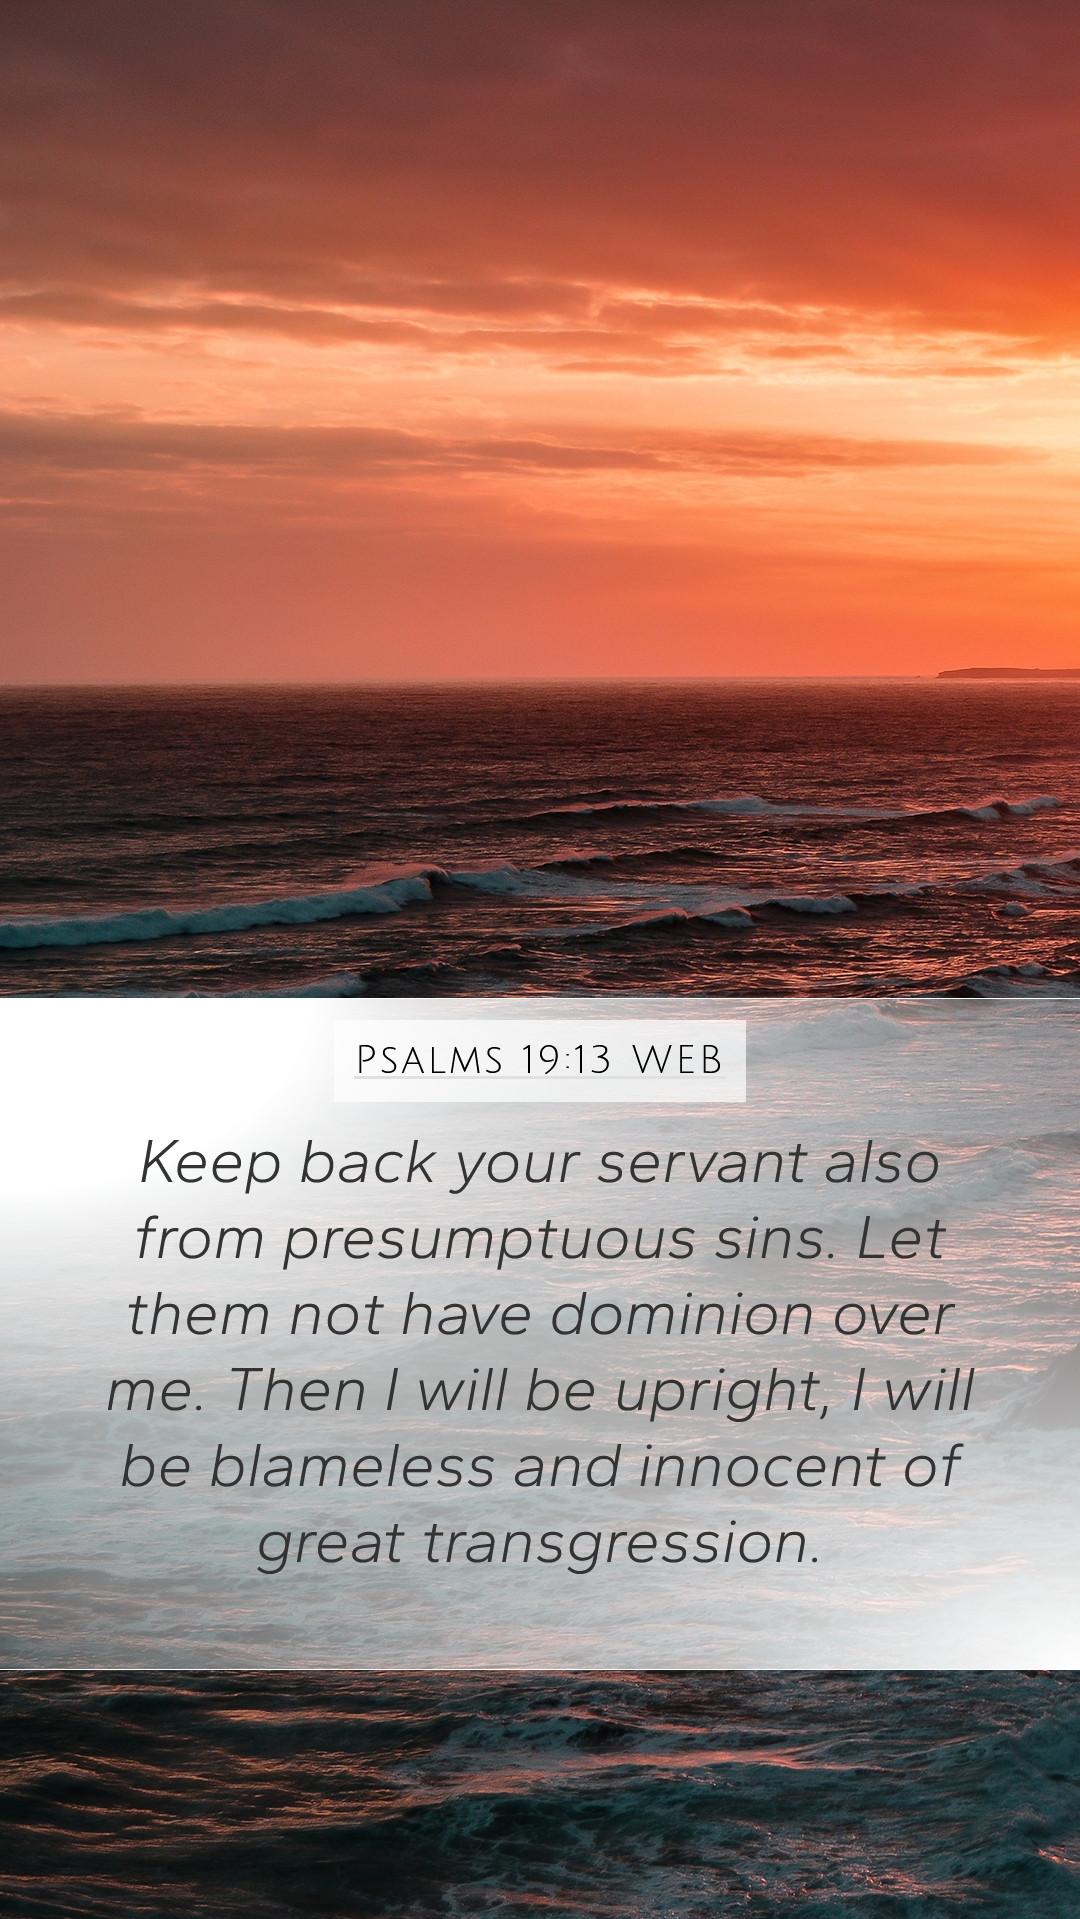 Psalms Web Mobile Phone Wallpaper Keep Back Your Servant